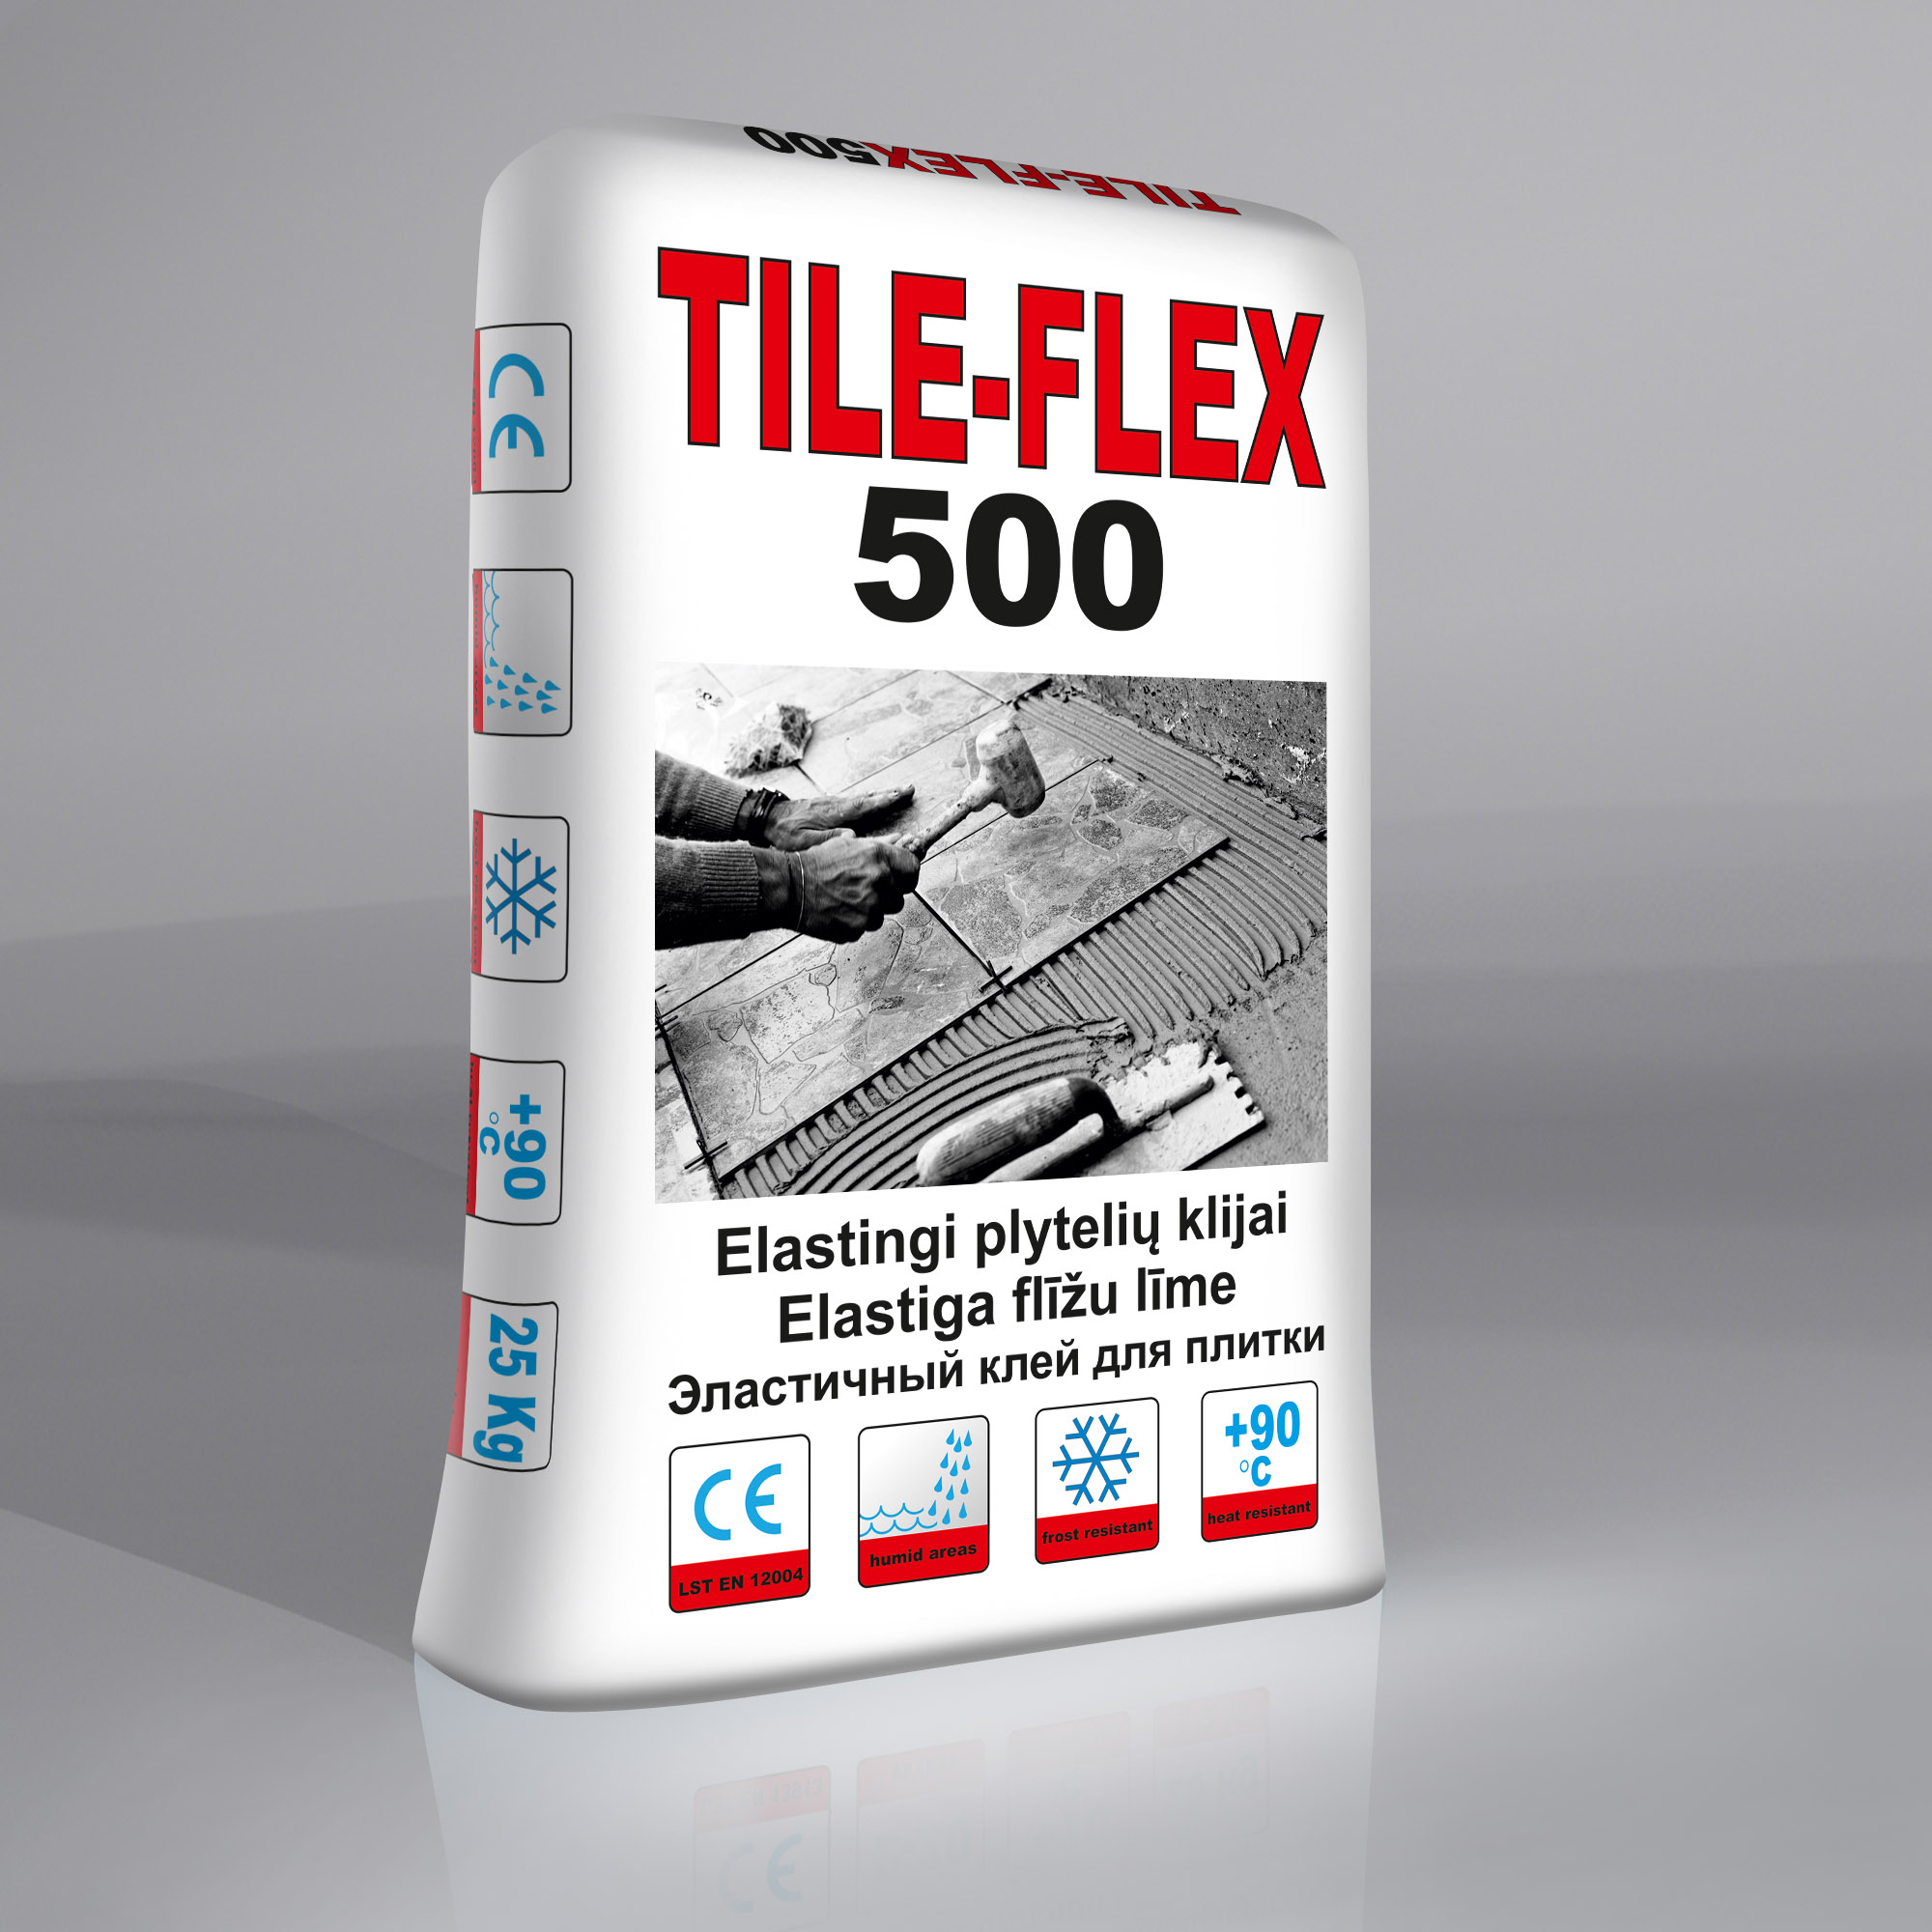 TILE FLEX500 elastīgā flīžu līme